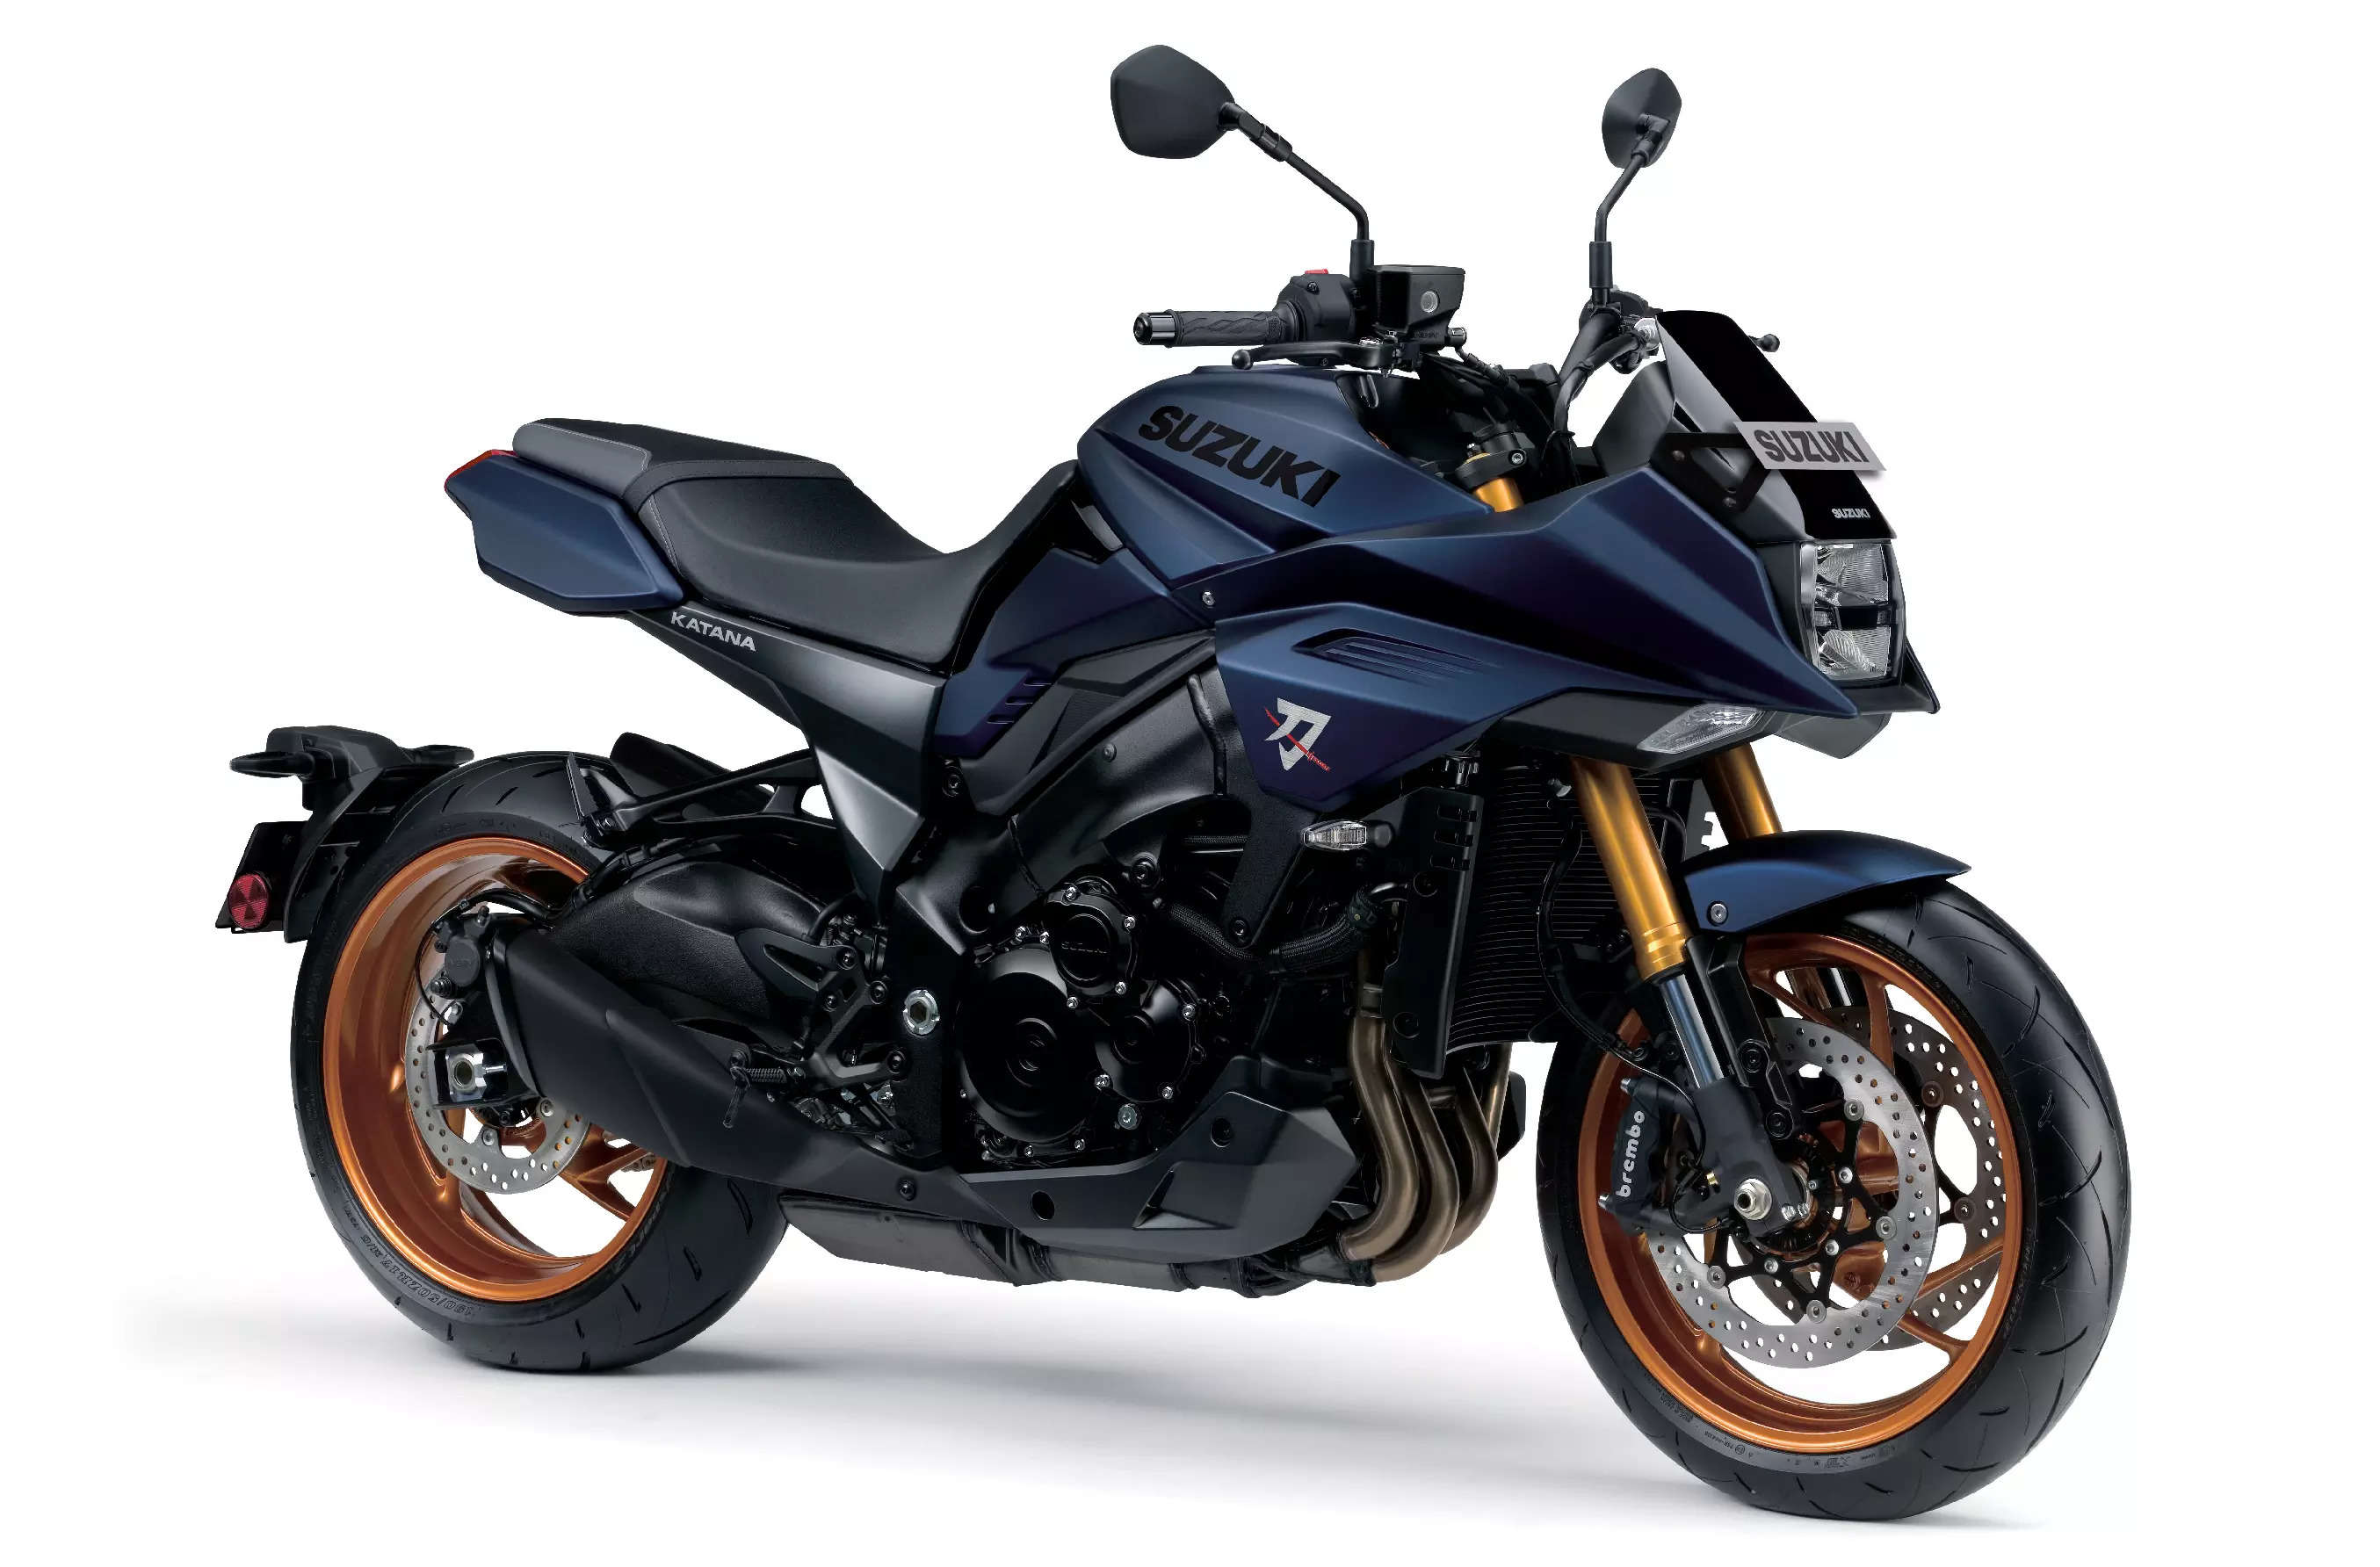 Suzuki Motorcycle launches Katana at INR 13,61,000 in India